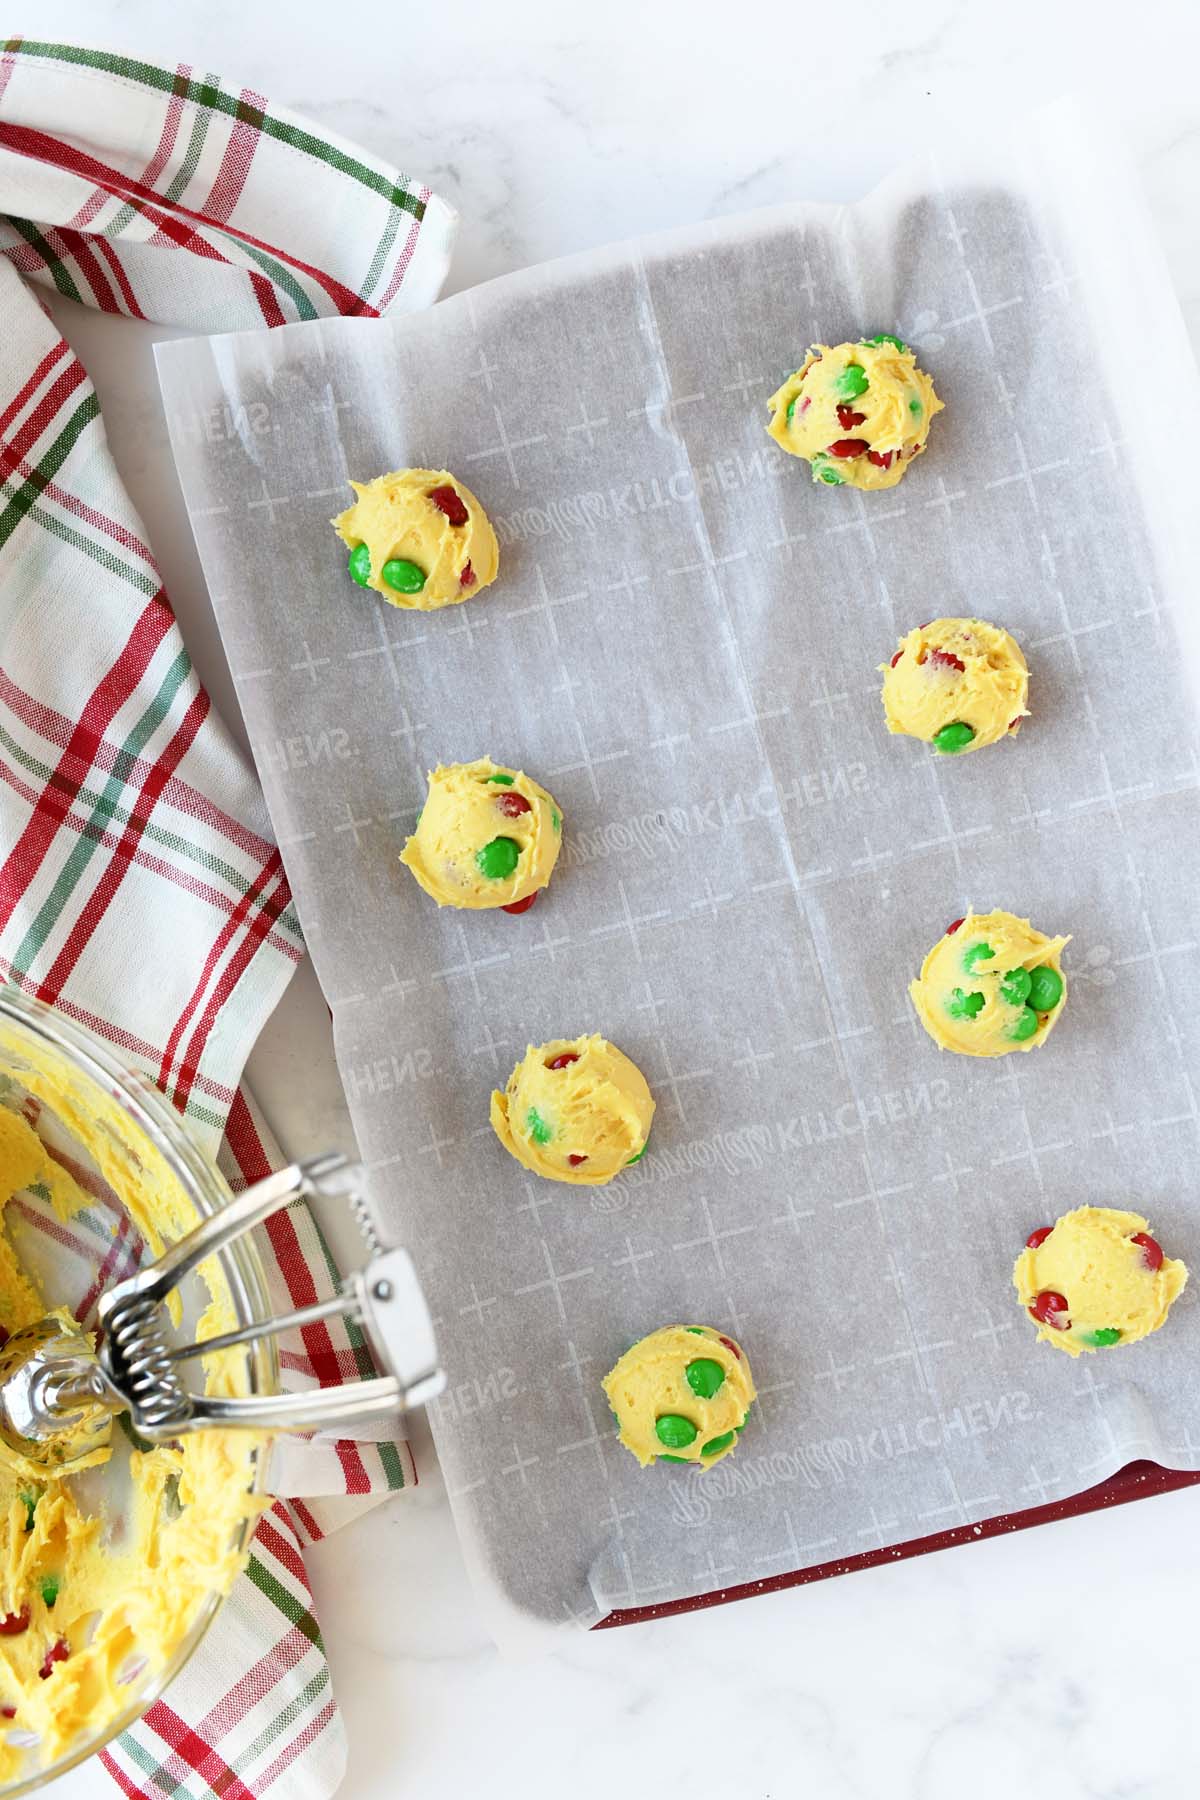 Cake mix cookie dough balls on a baking sheet.